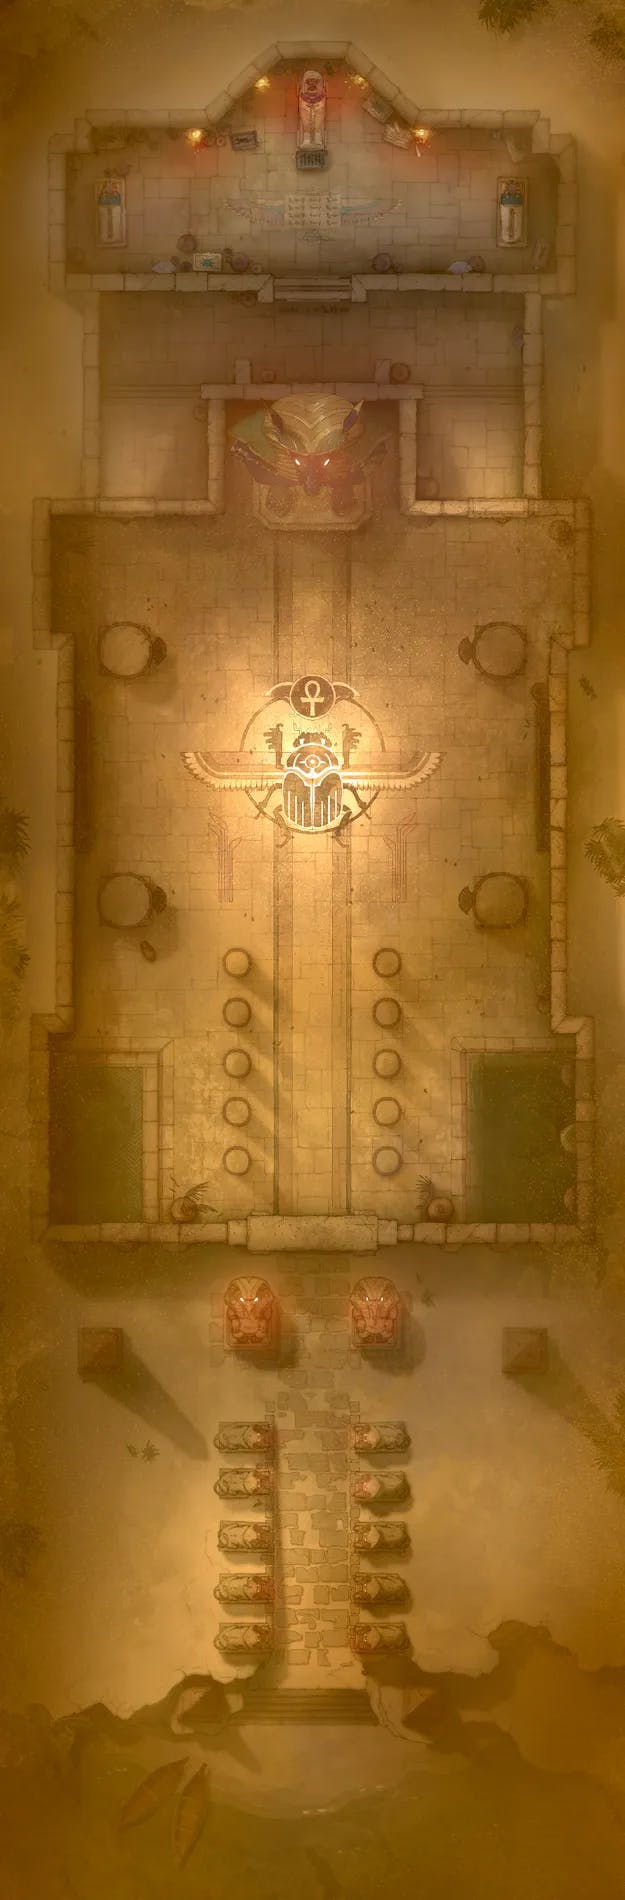 Pharaoh's Tomb map, Sandstorm Day variant